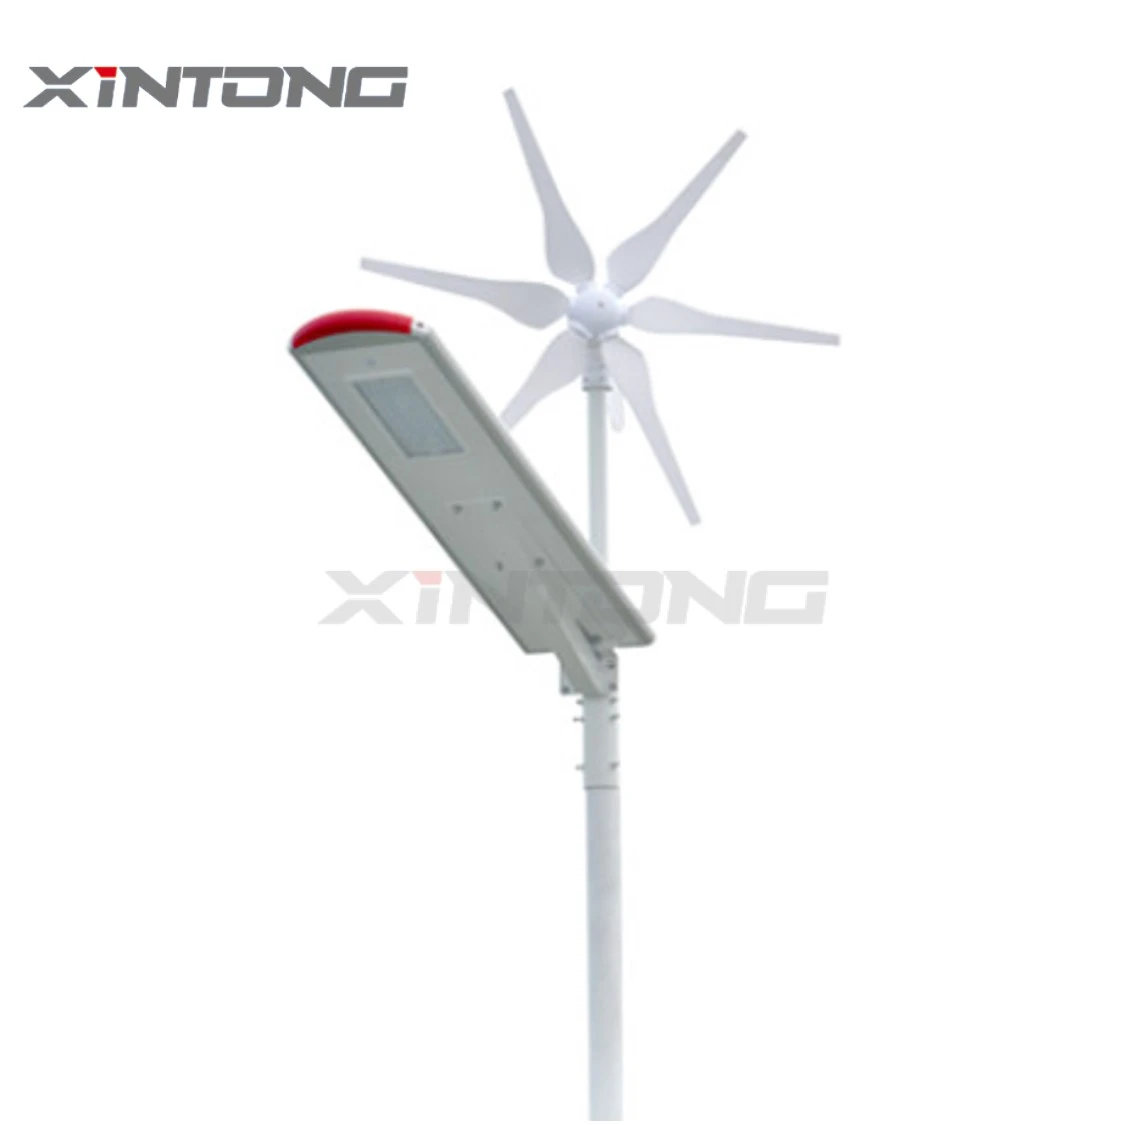 Xintong 30w Integrated Wind Hybrid System Street Light Solar Wind Hybrid